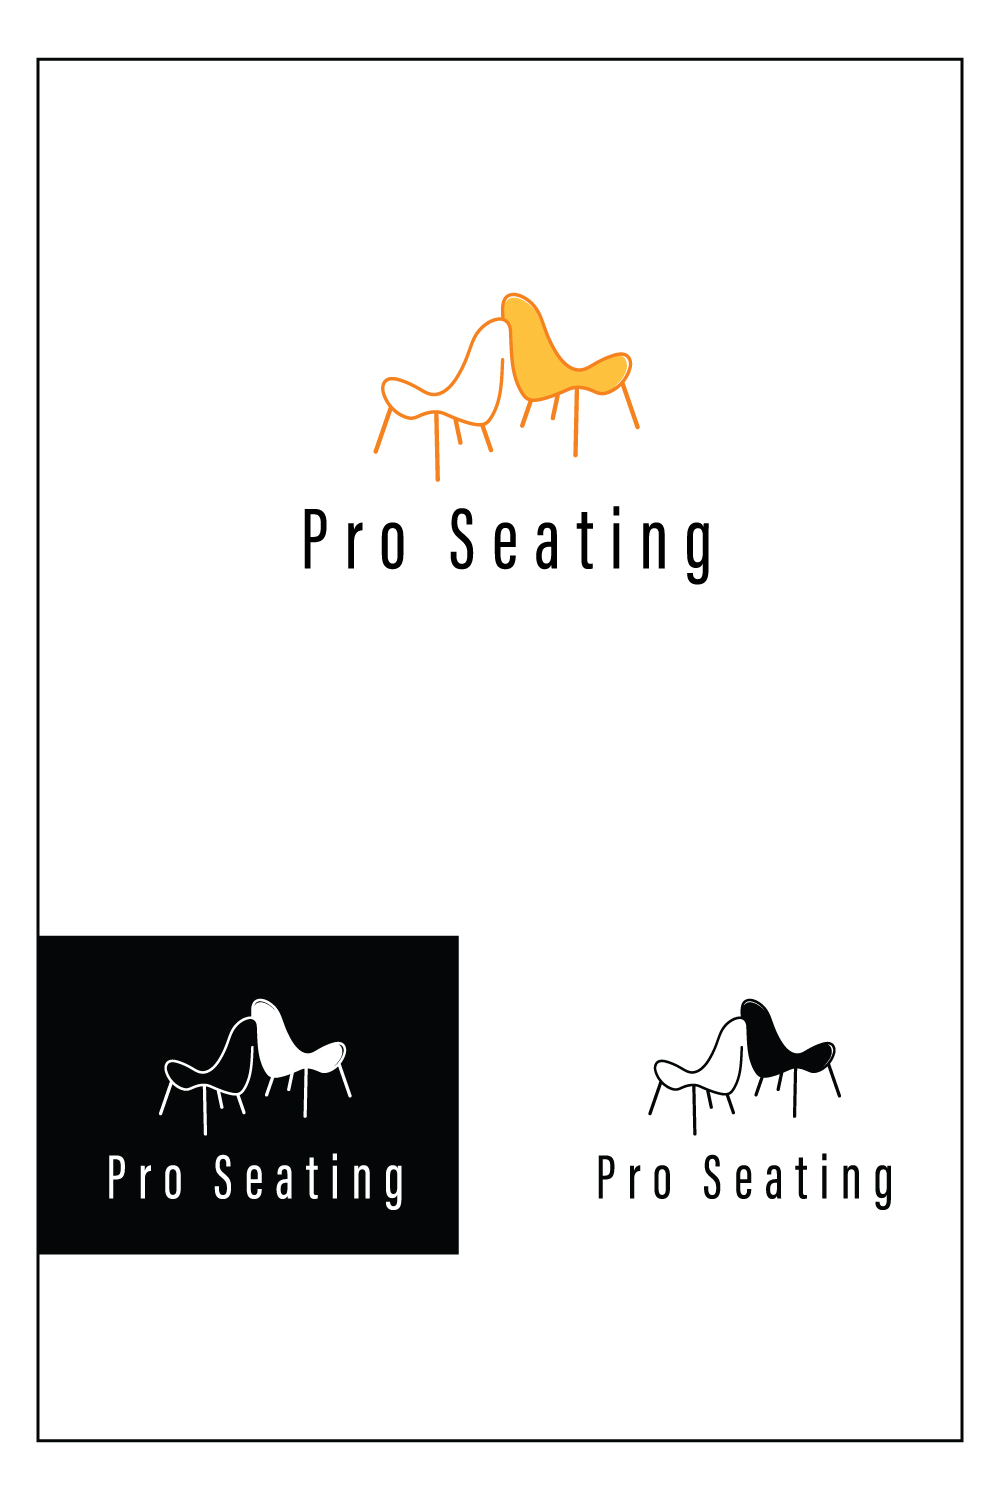 Chair Pro Seating Logo pinterest image.